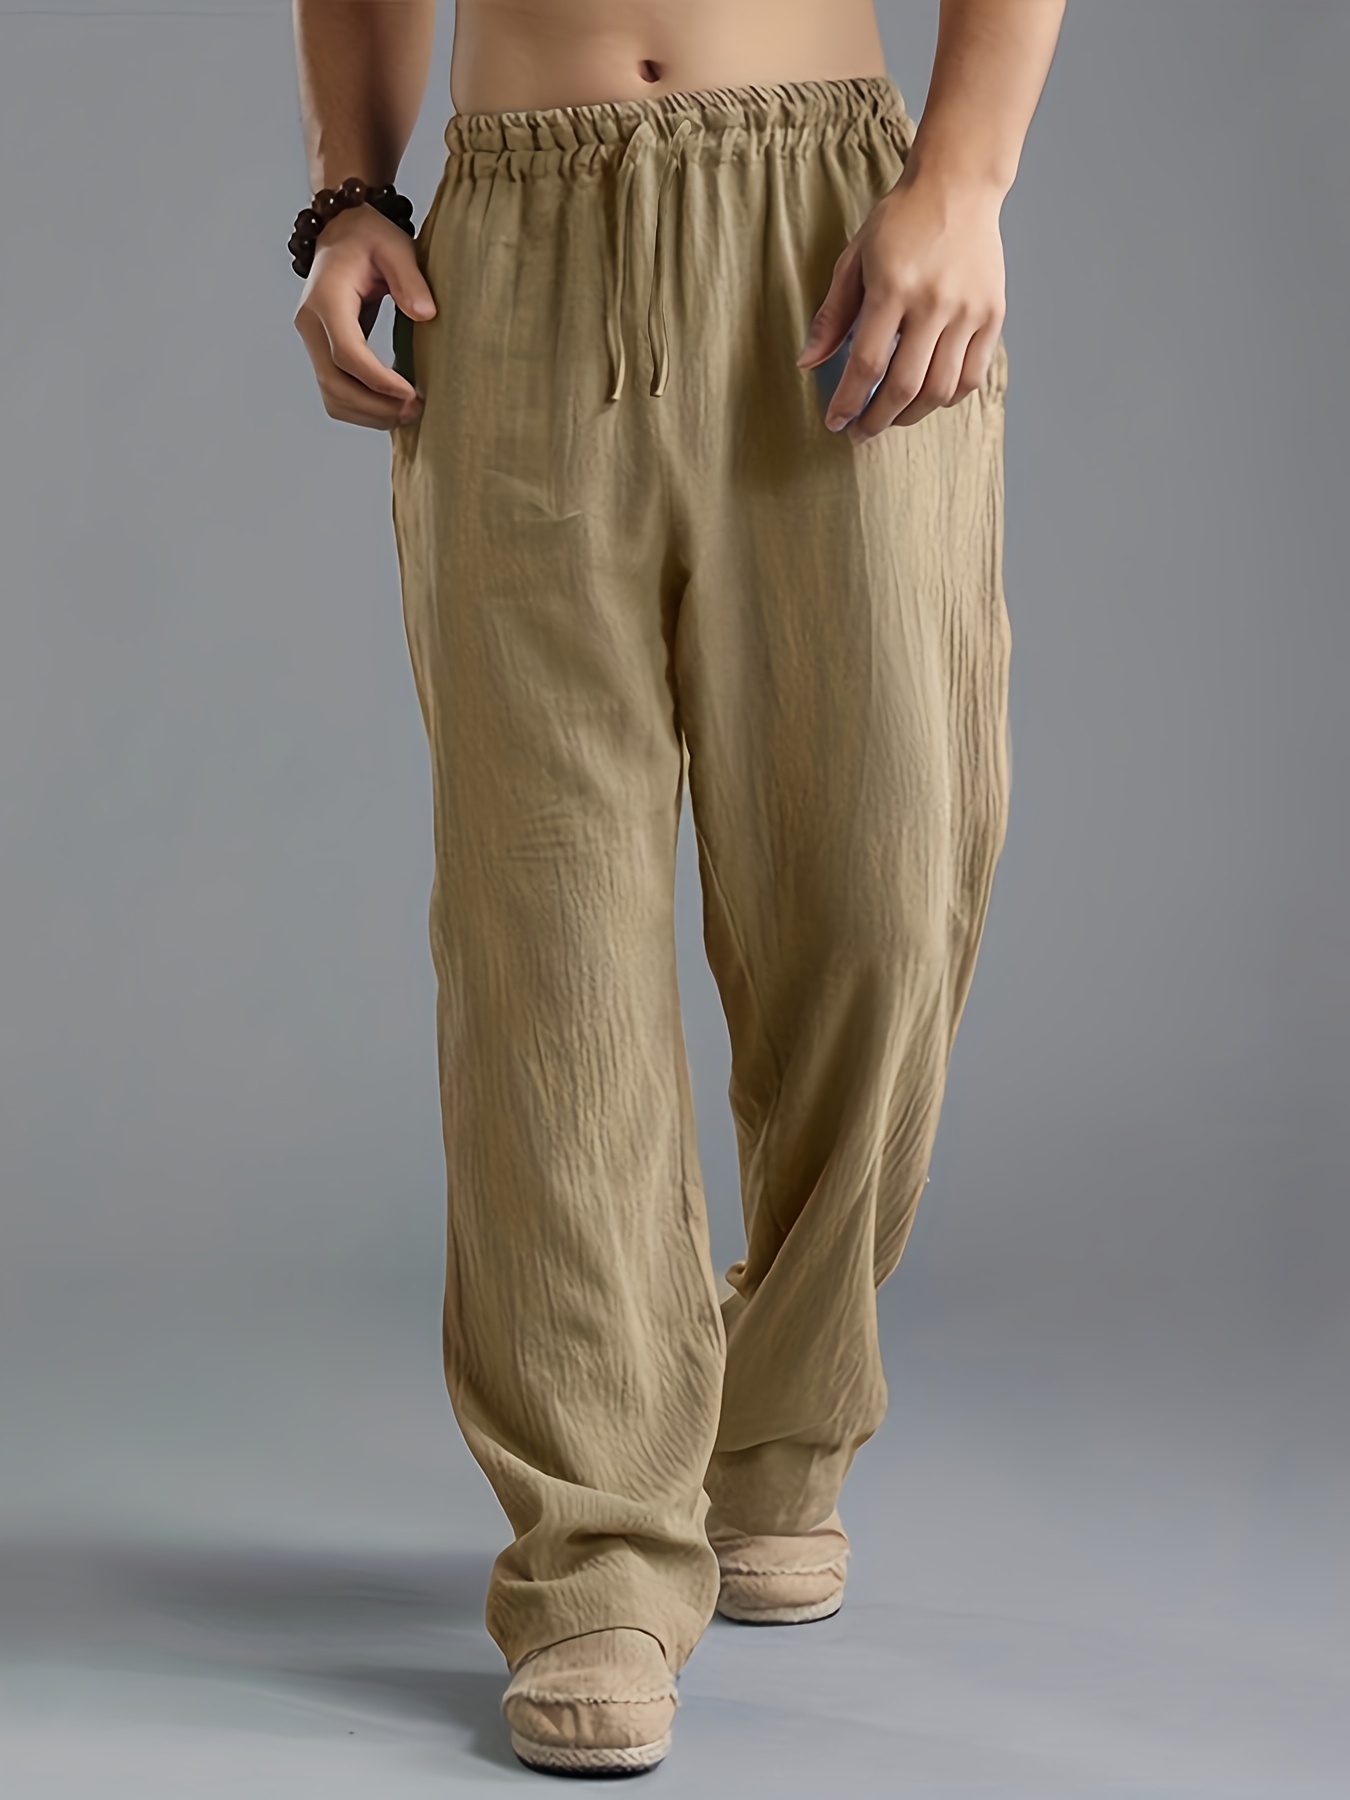 Womens Comfy Cotton Linen Pants Solid High Waist Drawstring Straight Leg  Pants Pockets Loose Breathable Outdoor Pants(XL,Khaki)